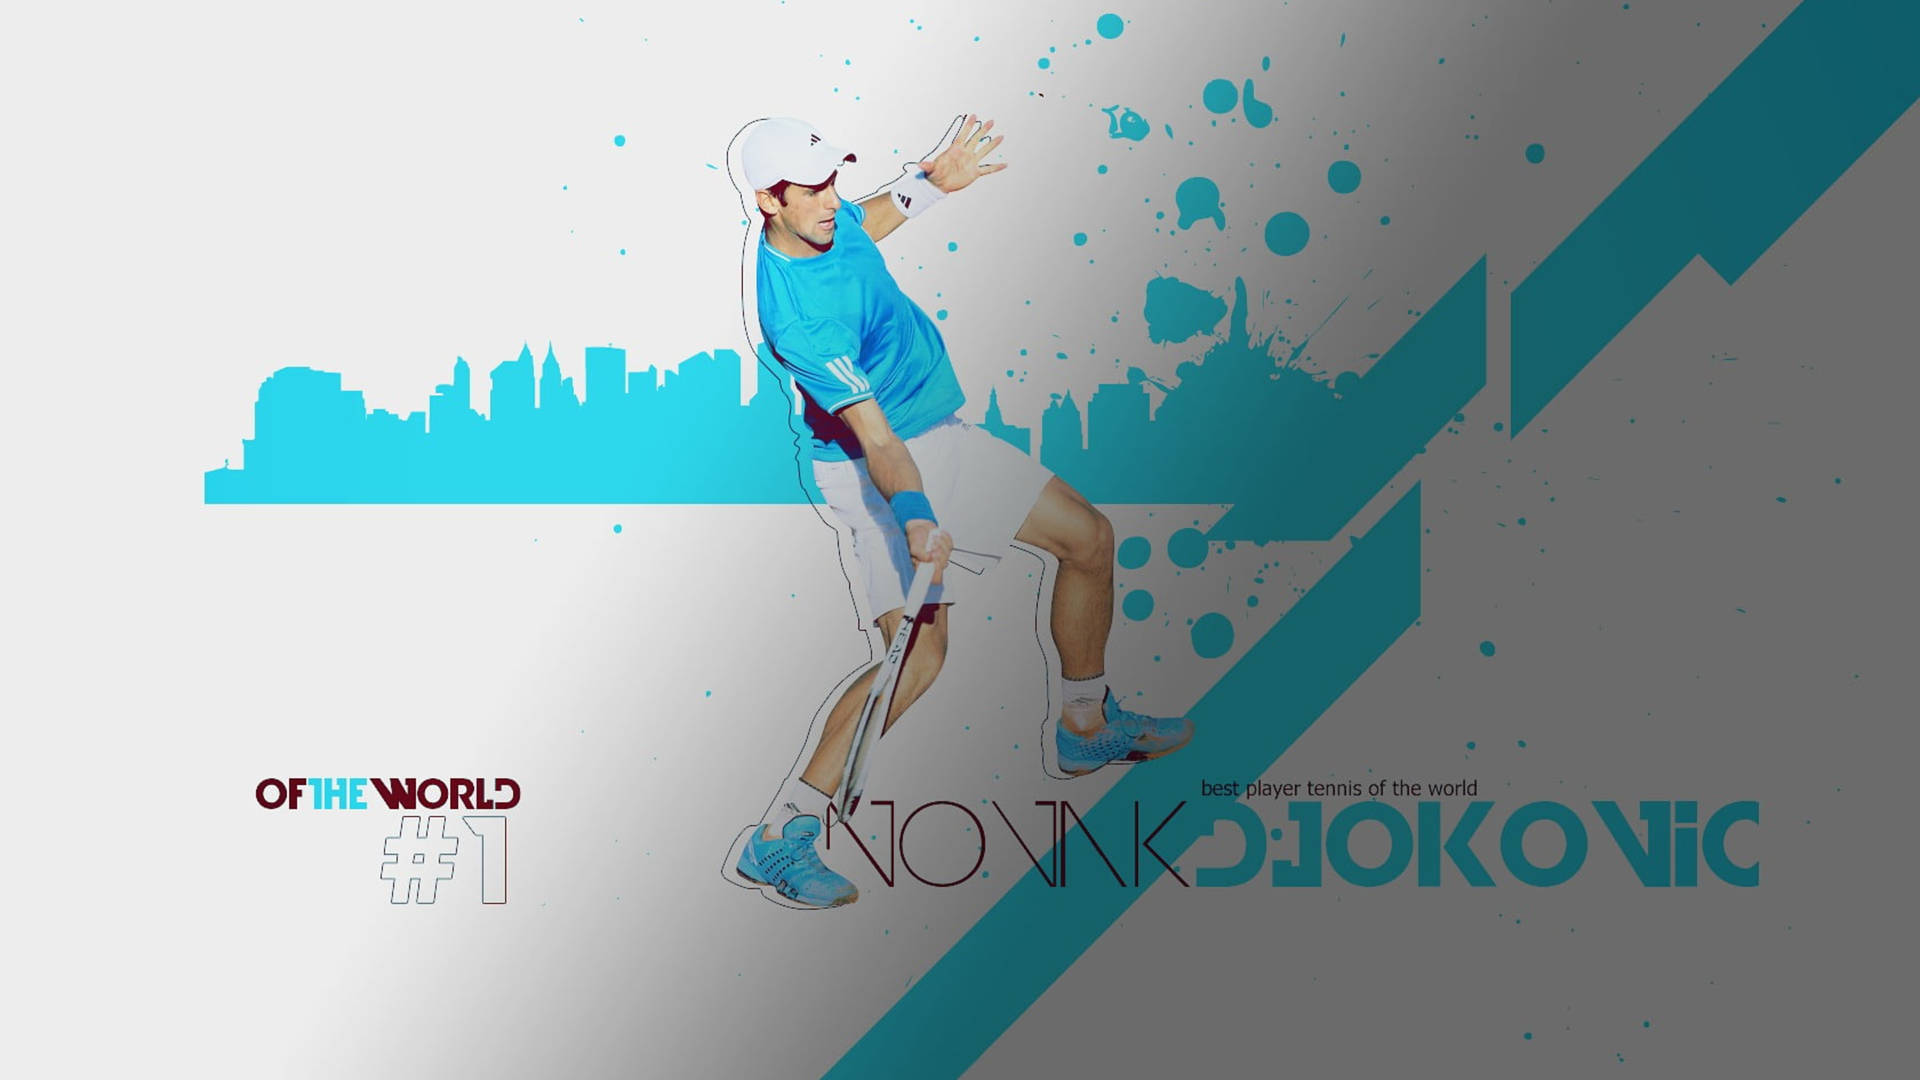 Djokovic Background Wallpaper